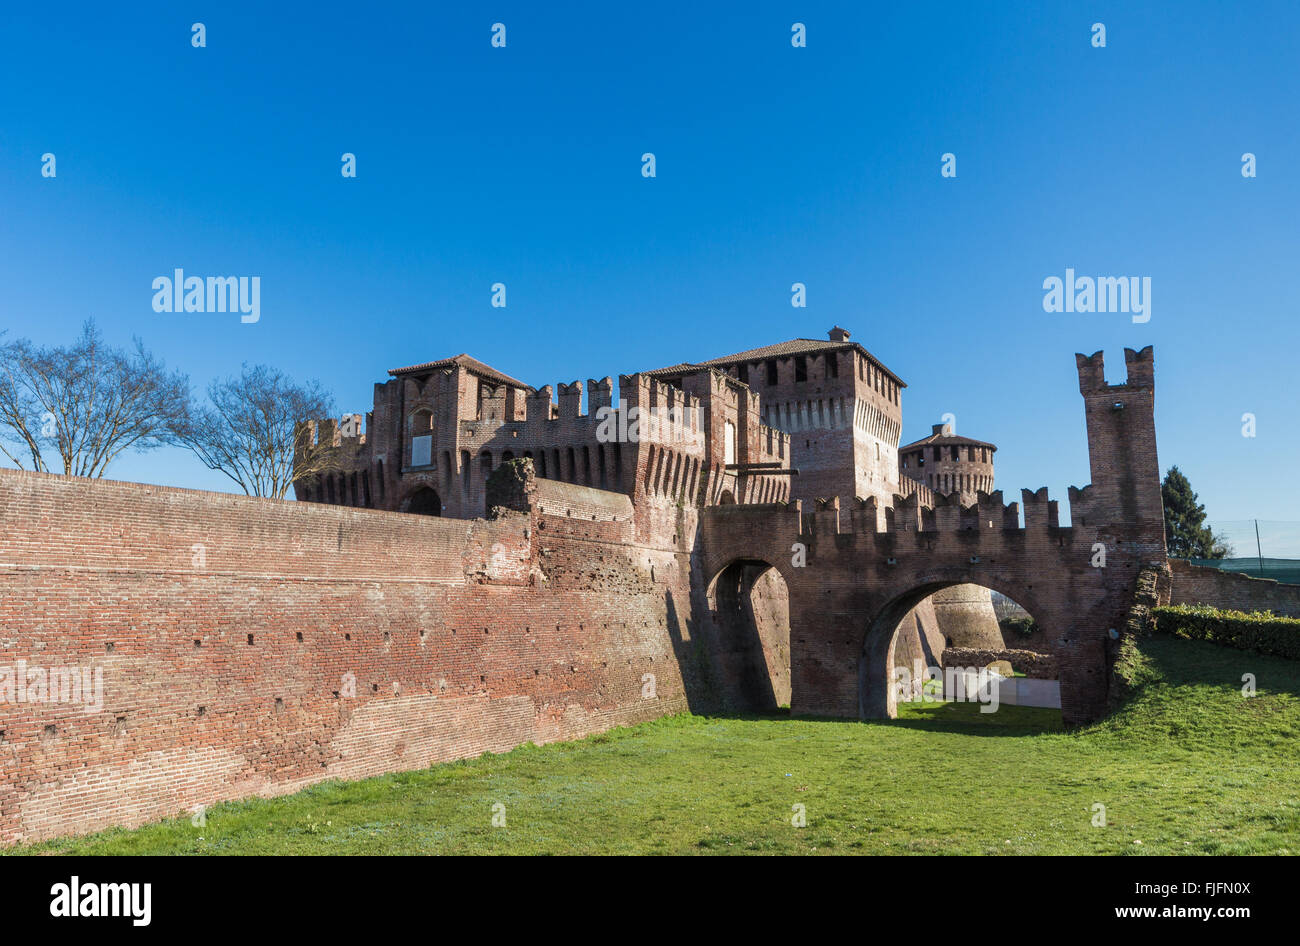 The Sforza medieval Castle in Soncino,Italy Stock Photo